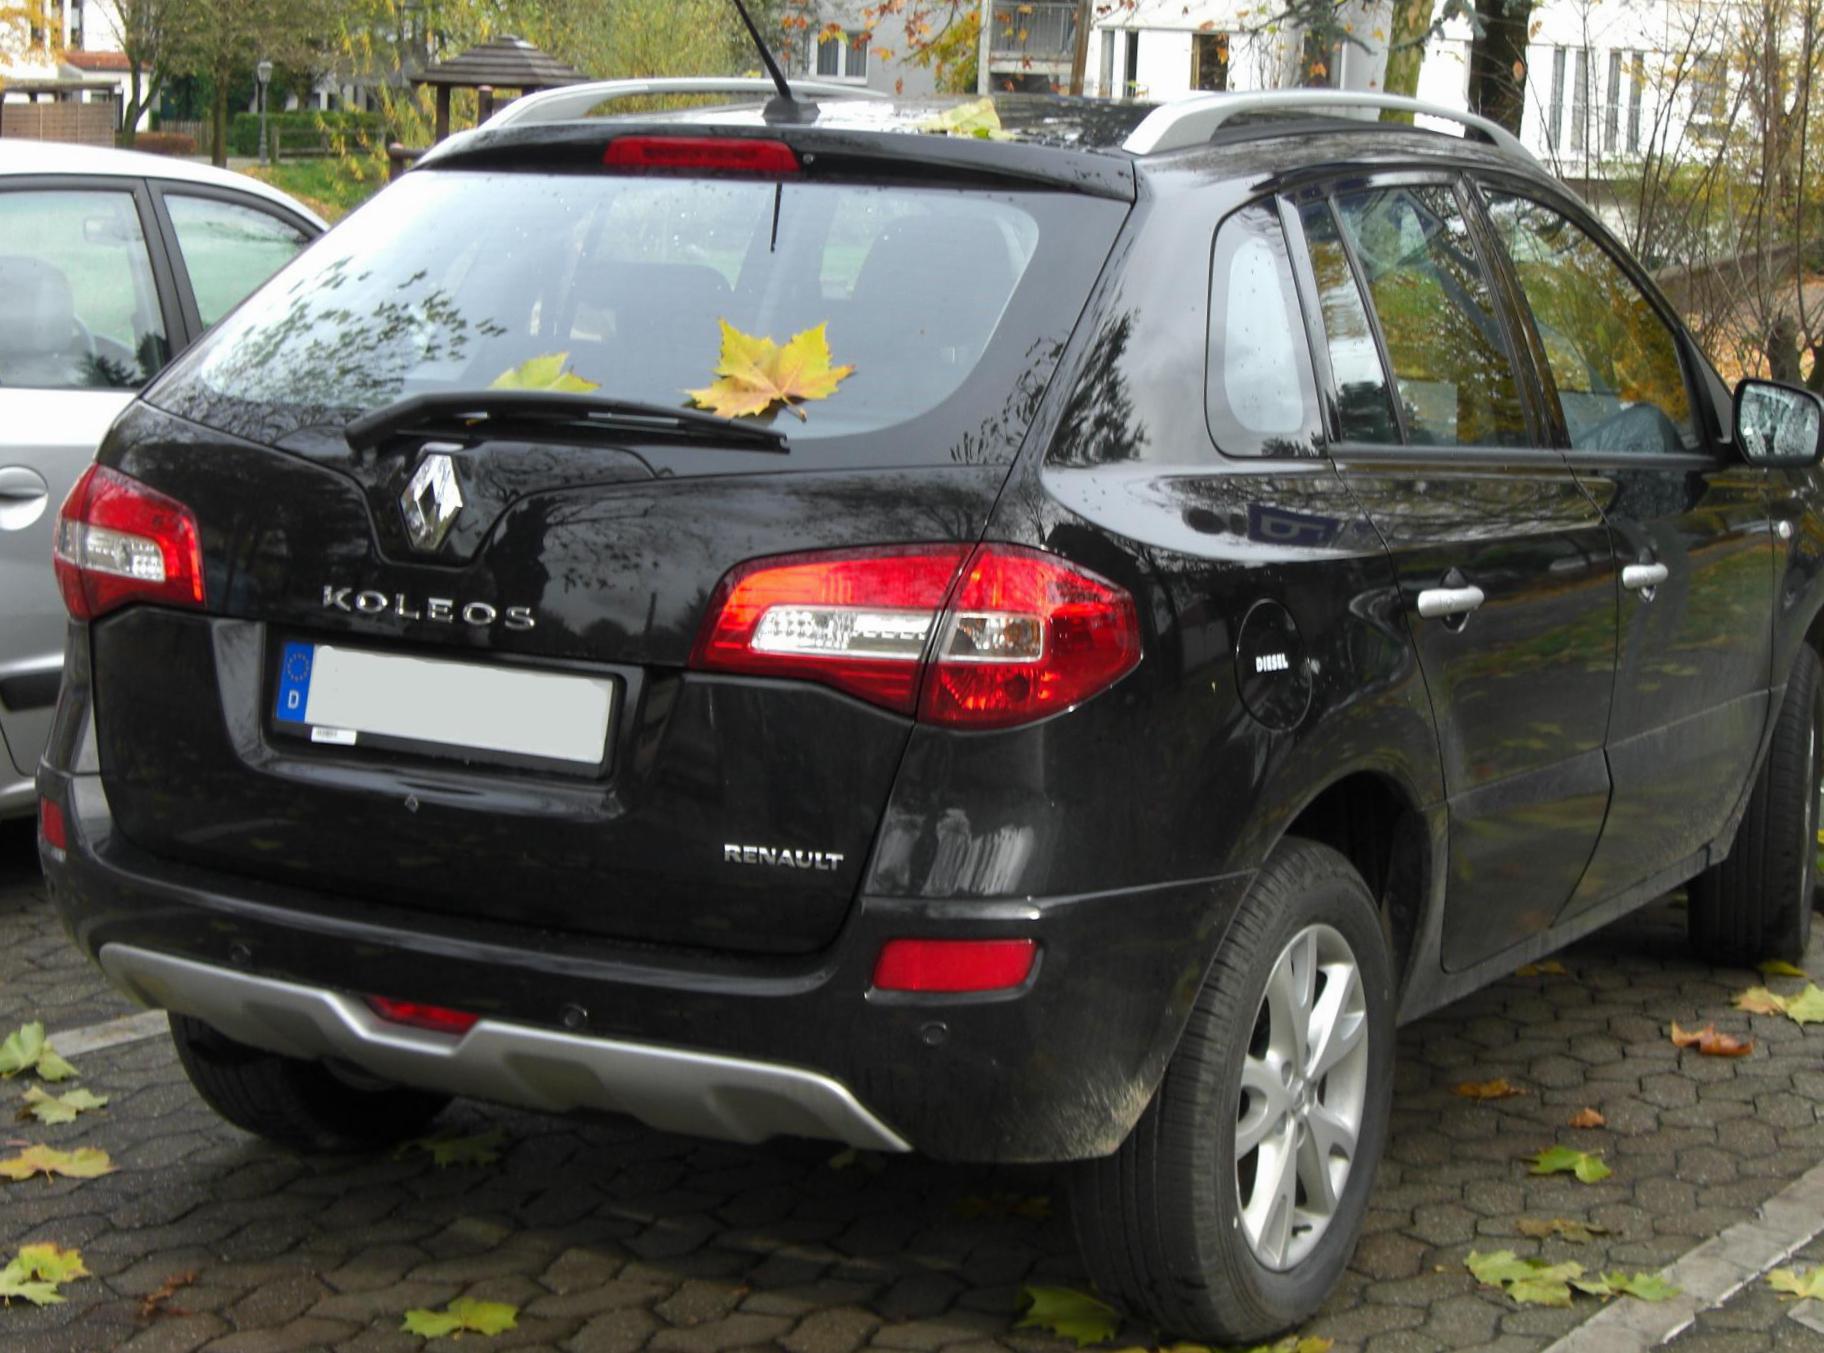 Koleos Renault review 2012